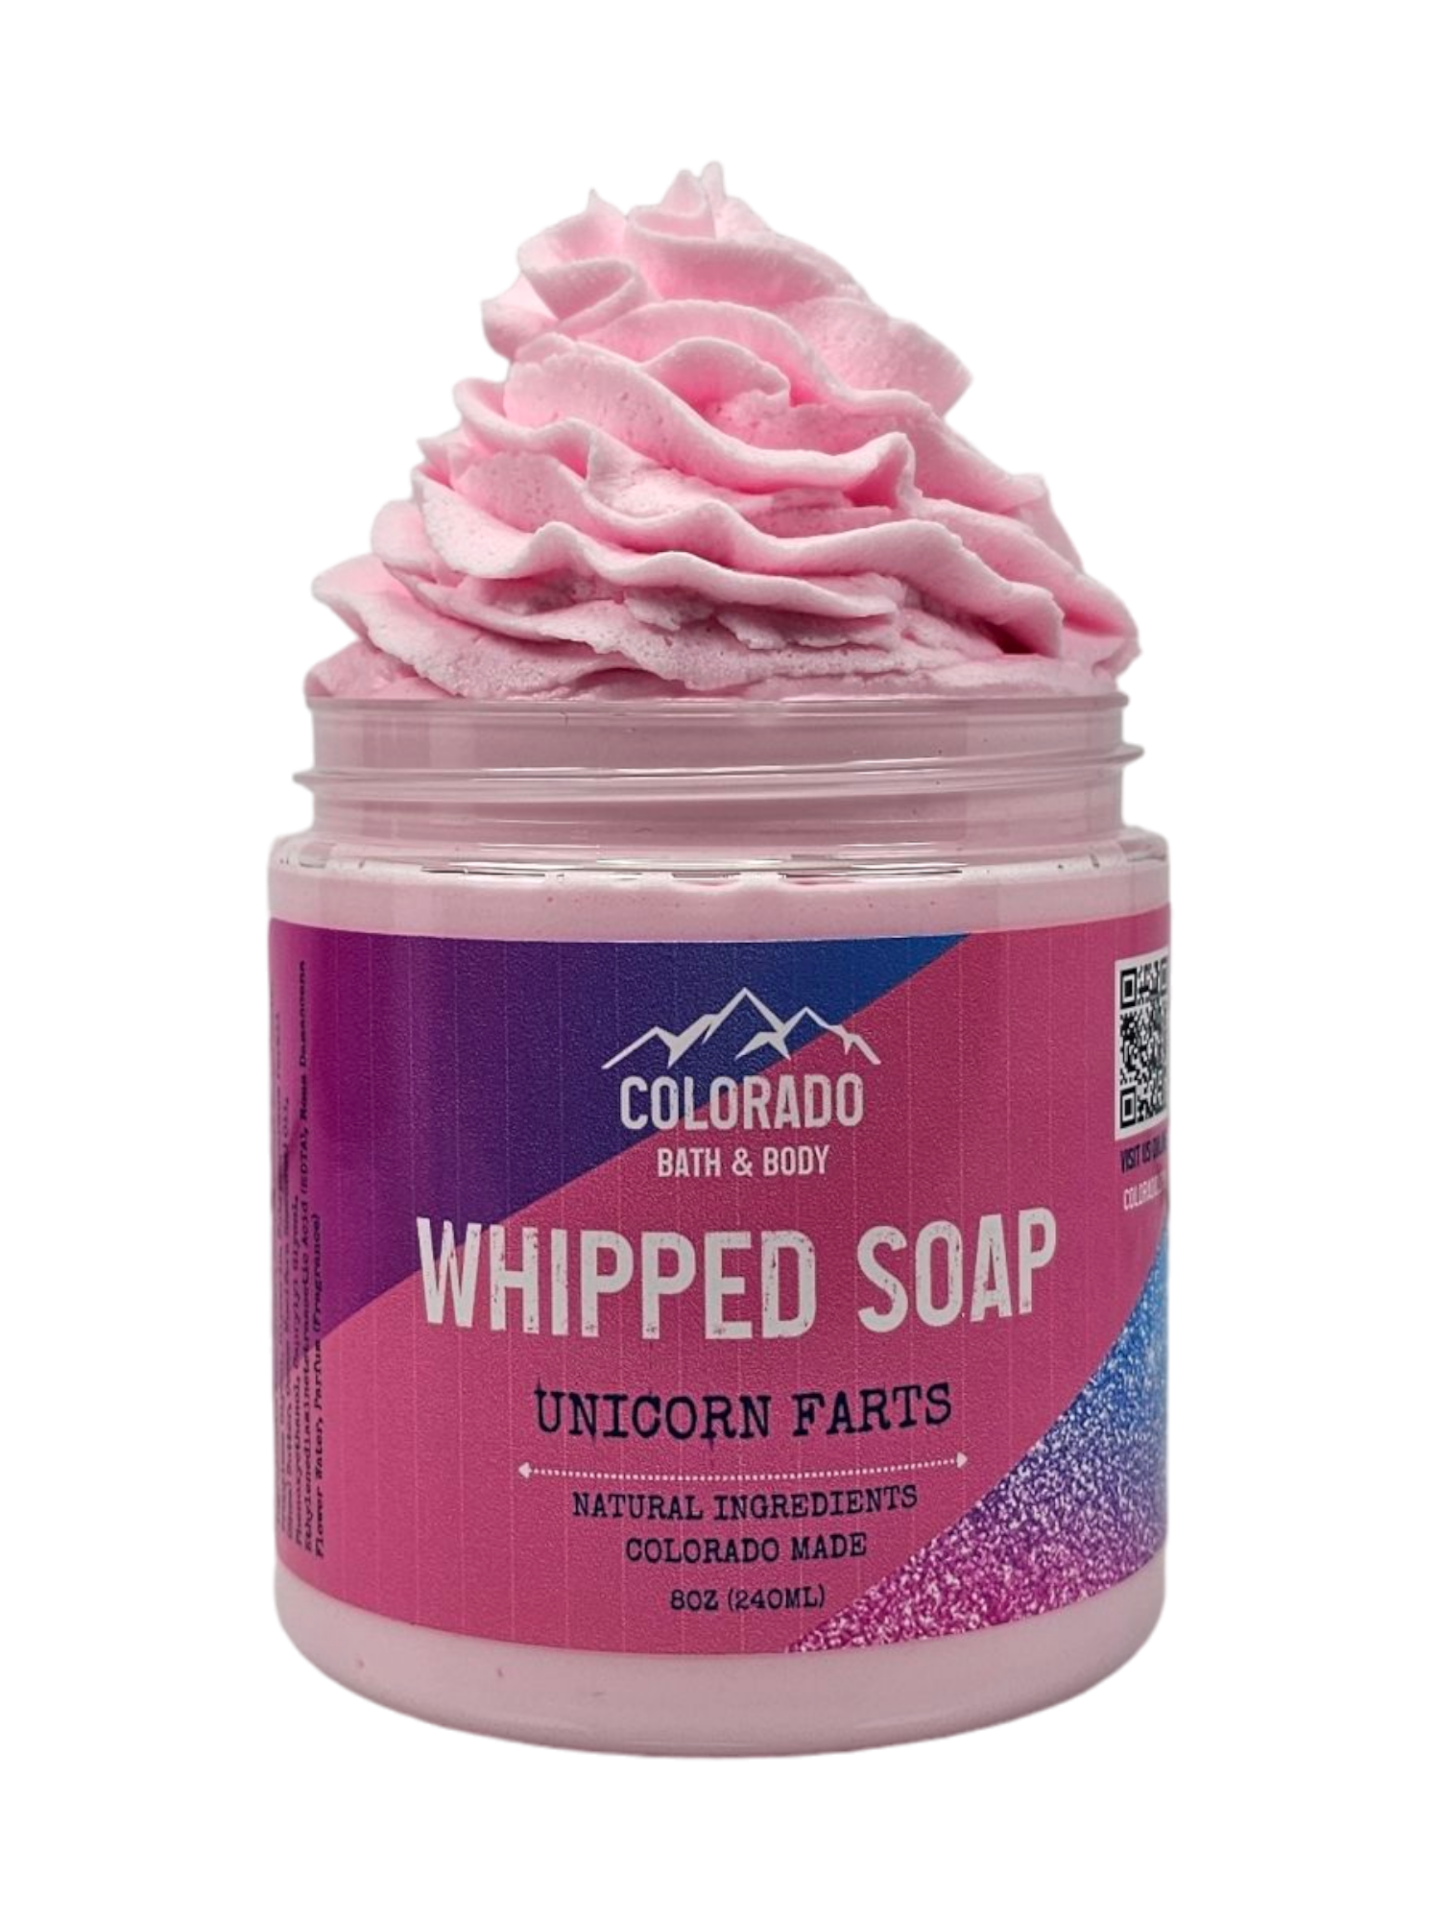 Unicorn Farts Whipped Soap